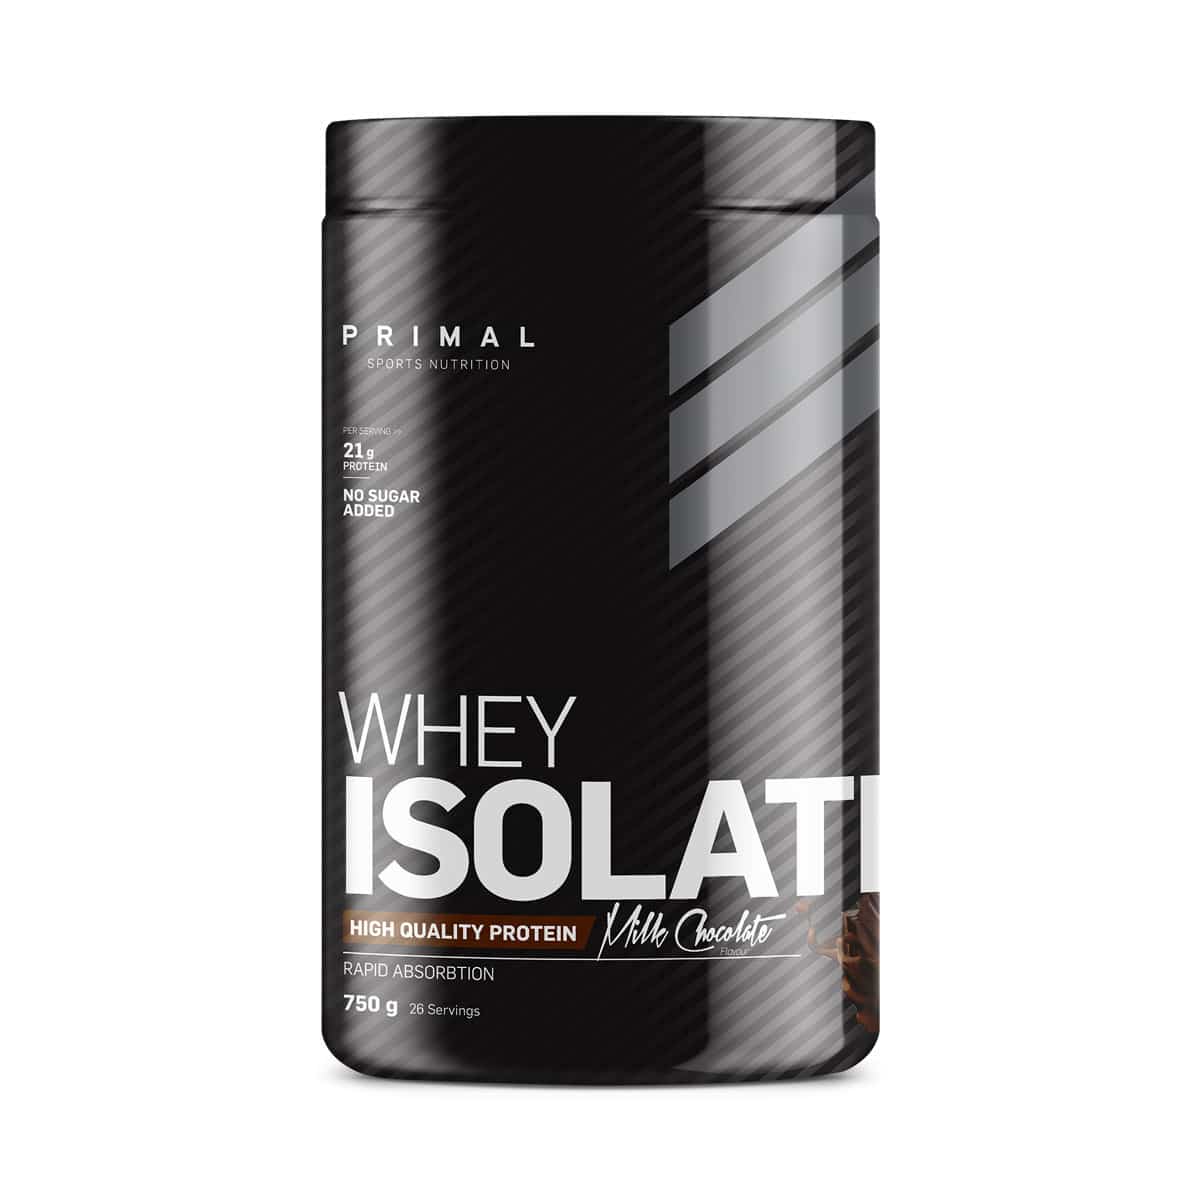 Primal Whey Isolate Chocolate - 750g